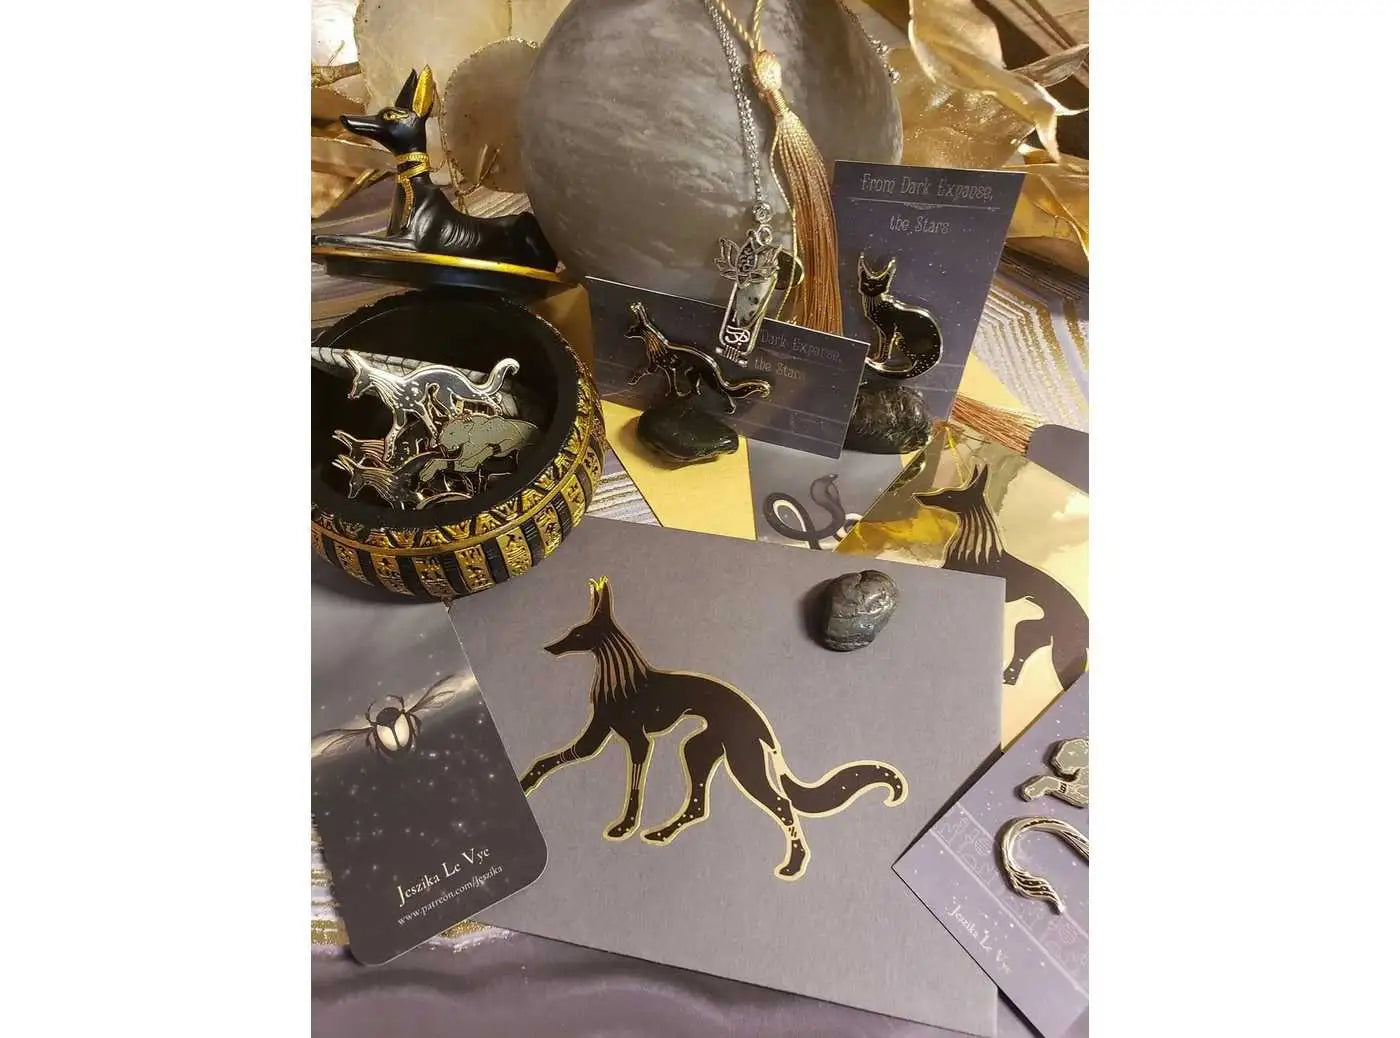 Anubis Sticker - Ancient Egypt Sticker - Egyptian Mythology Gifts - Ancient Egyptian Deity Gift - Jackal Decal - Gold Foil Metallic Chrome